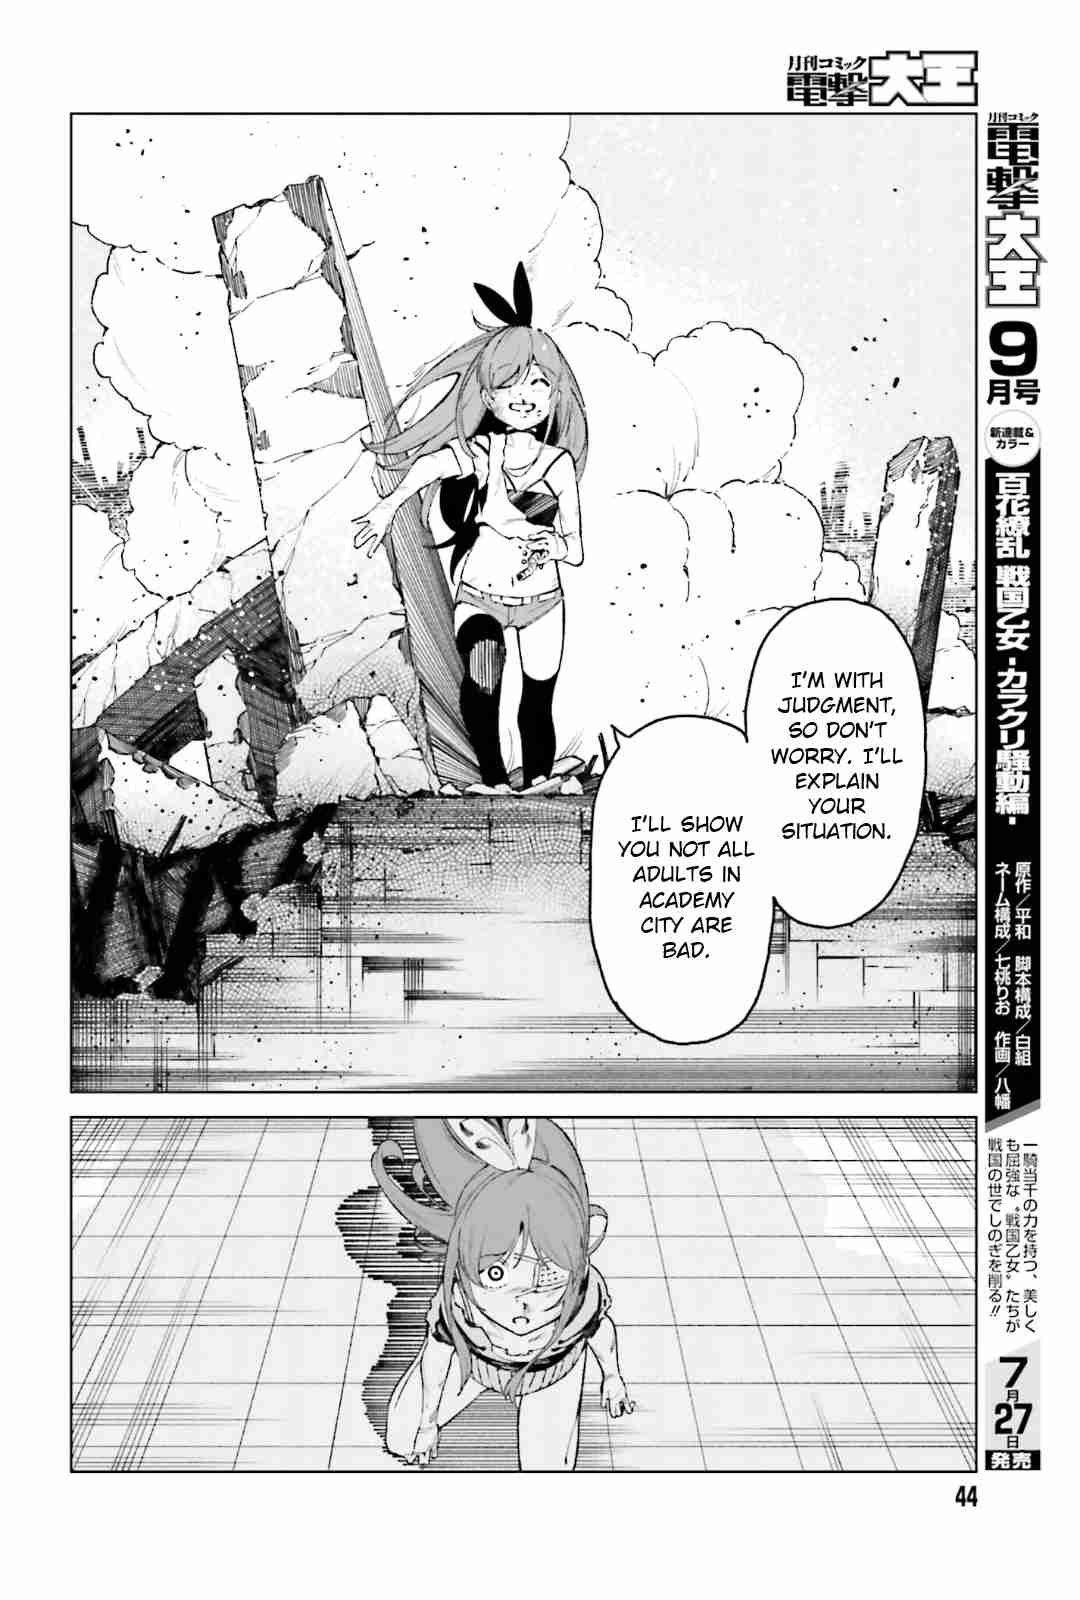 Toaru Kagaku no Accelerator Vol. 8 Ch. 46